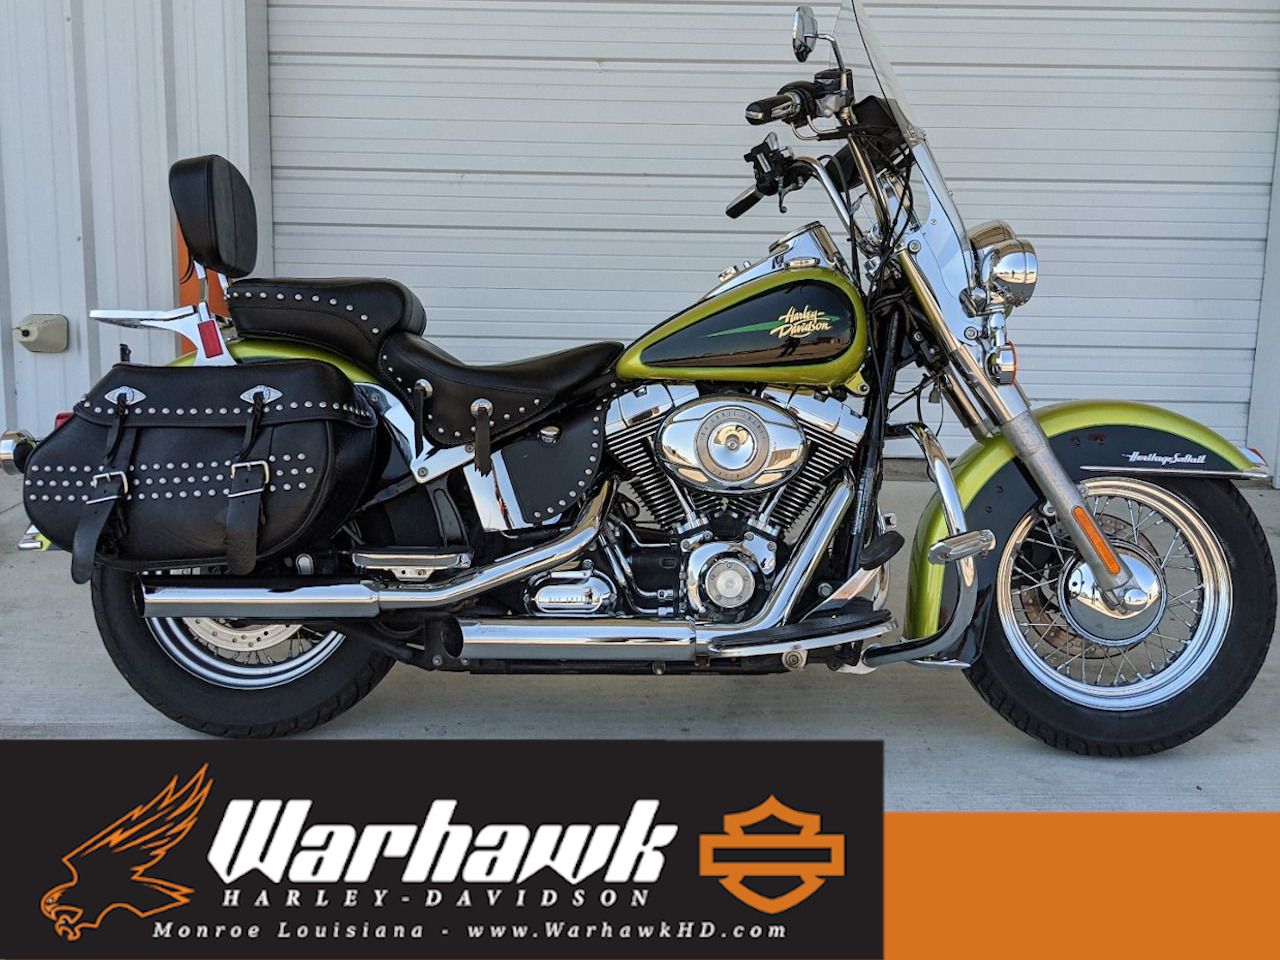 Used 2011 Harley Davidson Heritage Softail Classic Motorcycles In Monroe La U035934 Apple Green Vivid Black